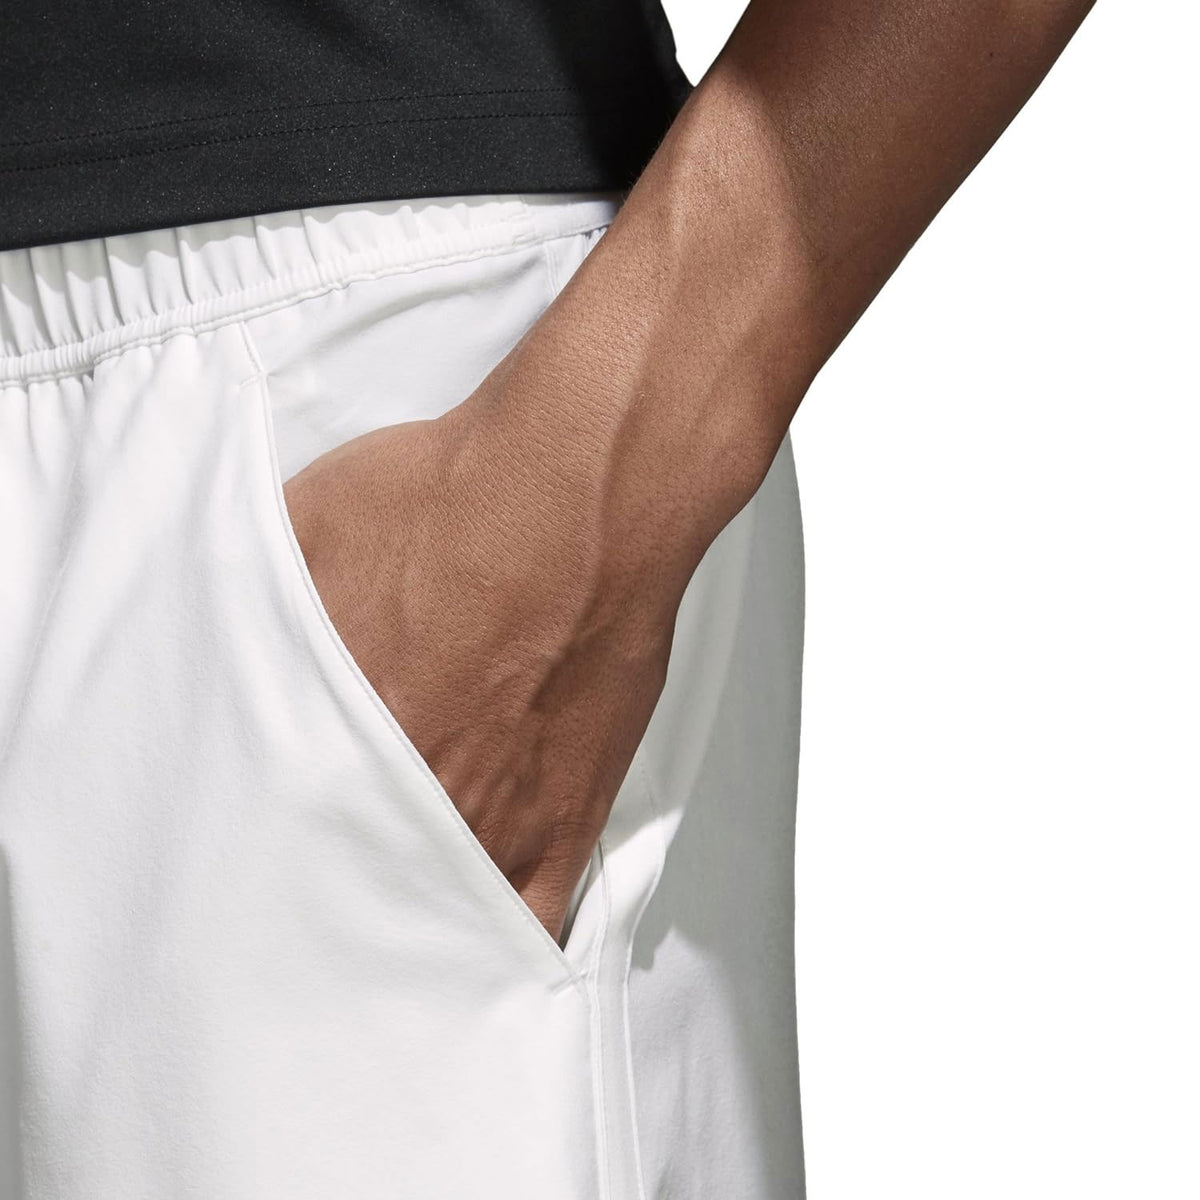 Adidas Mens Climalite Advantage Tennis Training Shorts - White - XS